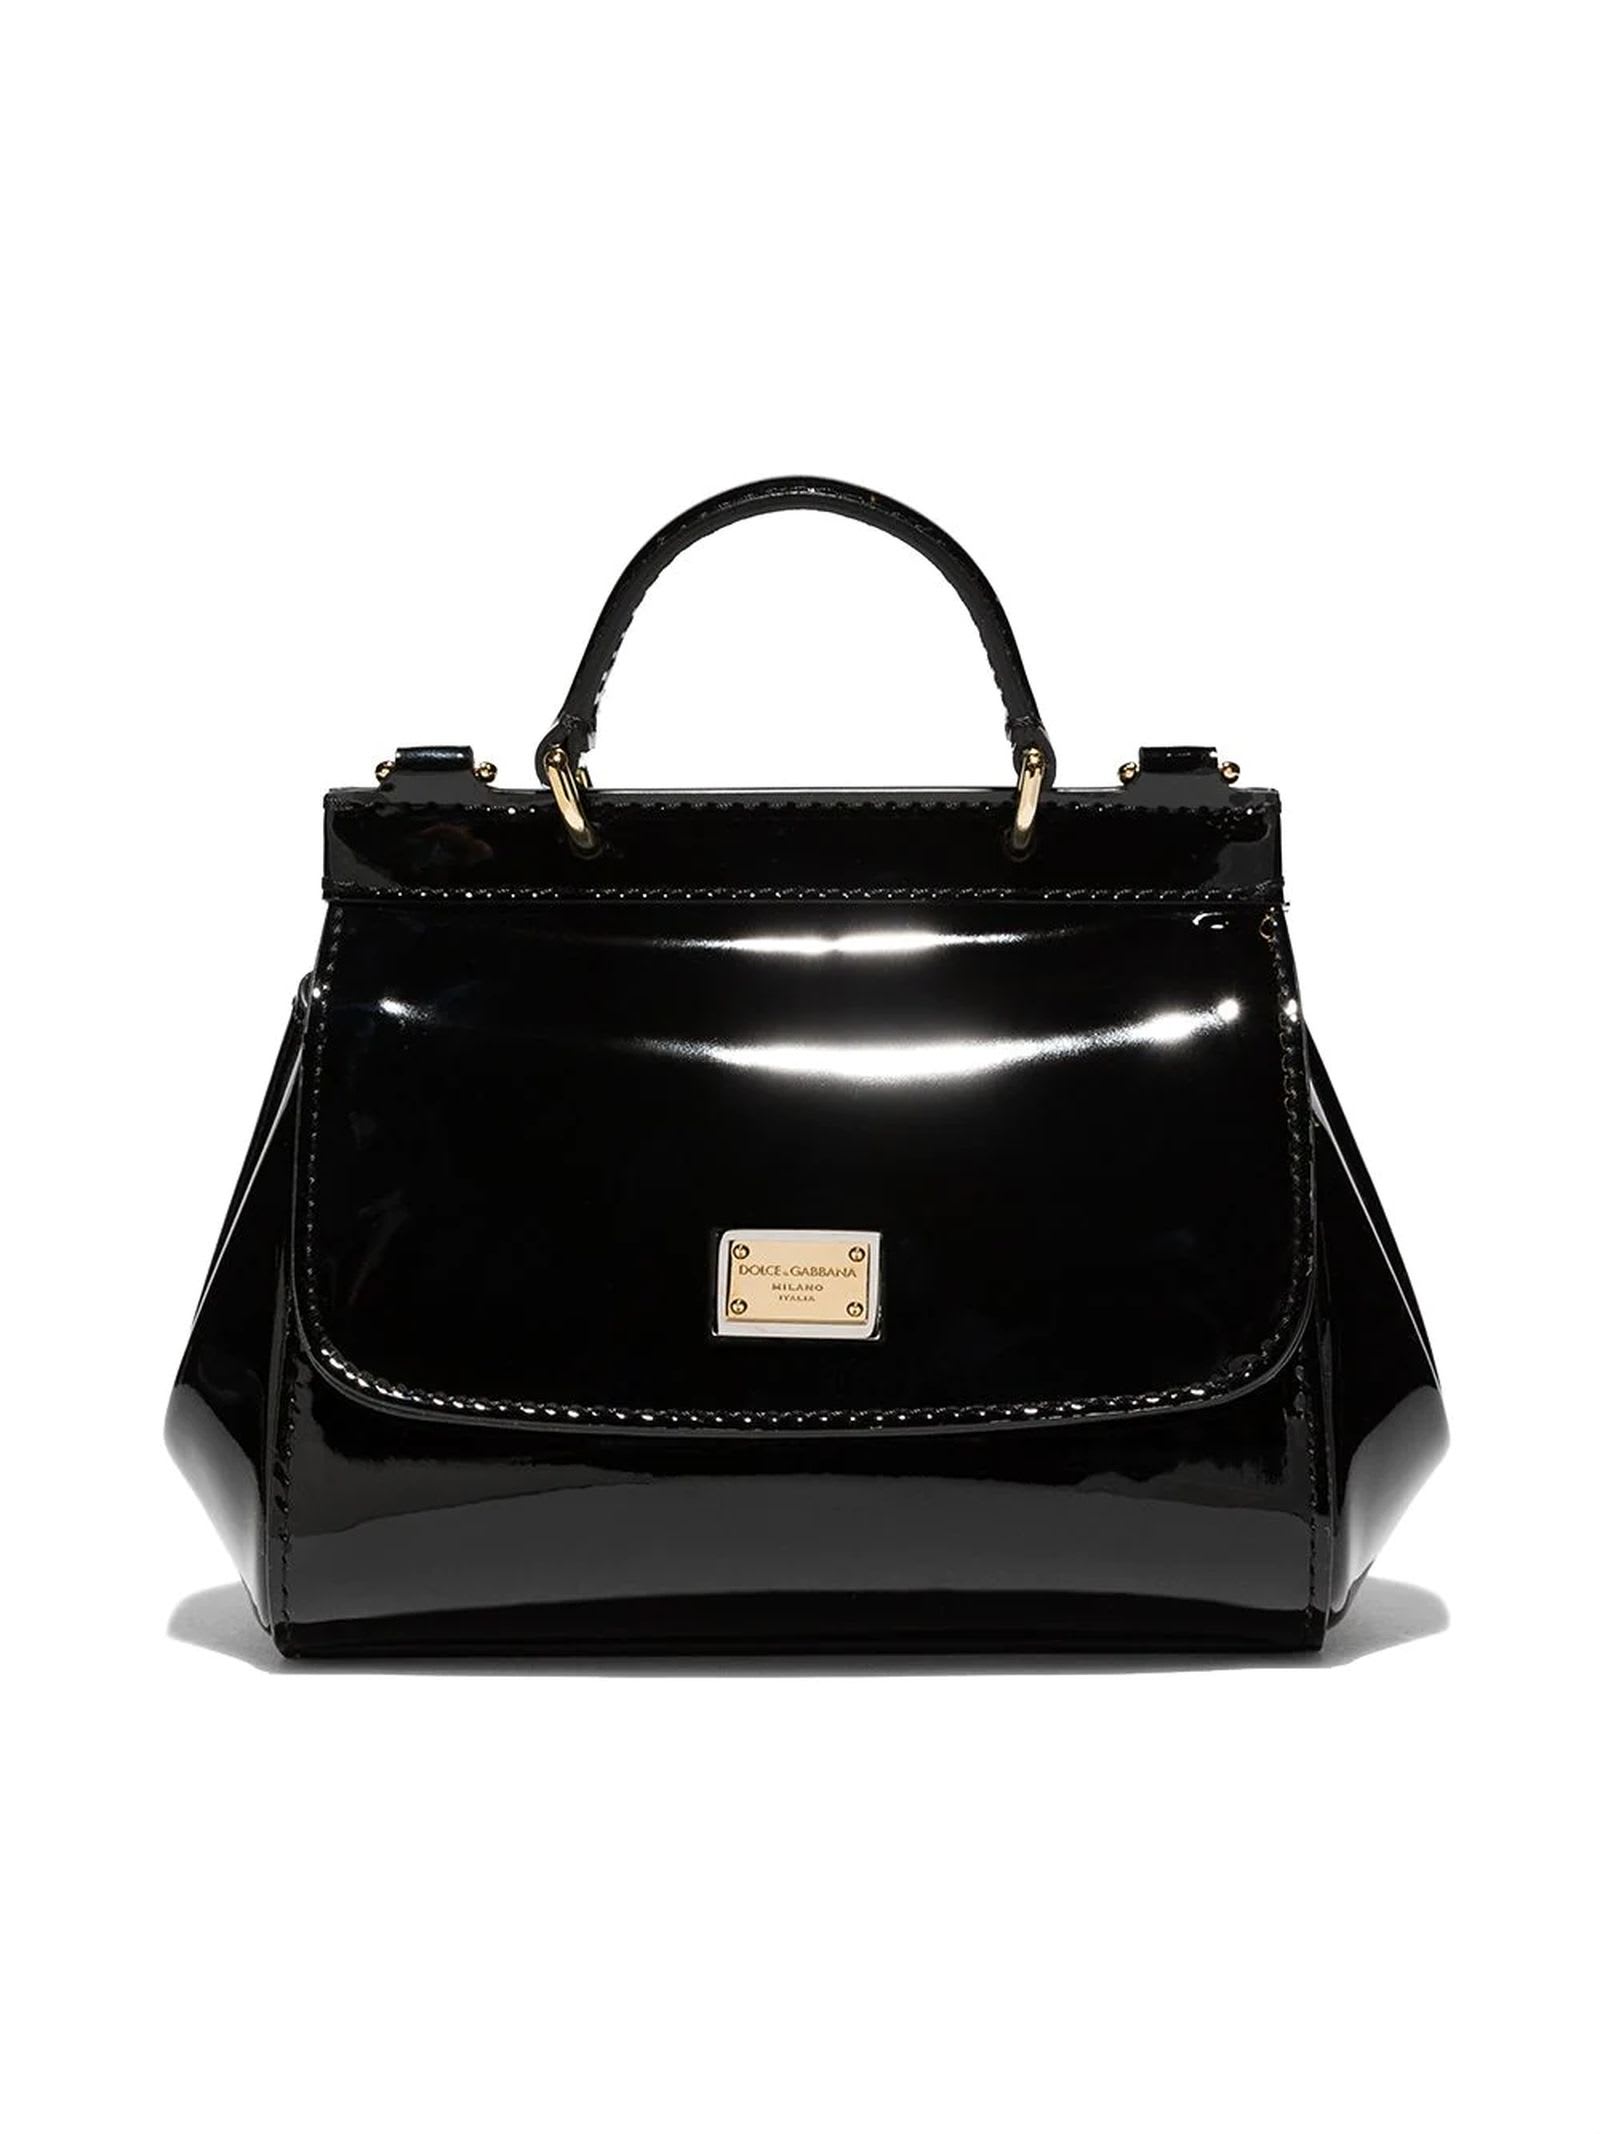 Dolce & Gabbana Black Leather Bag